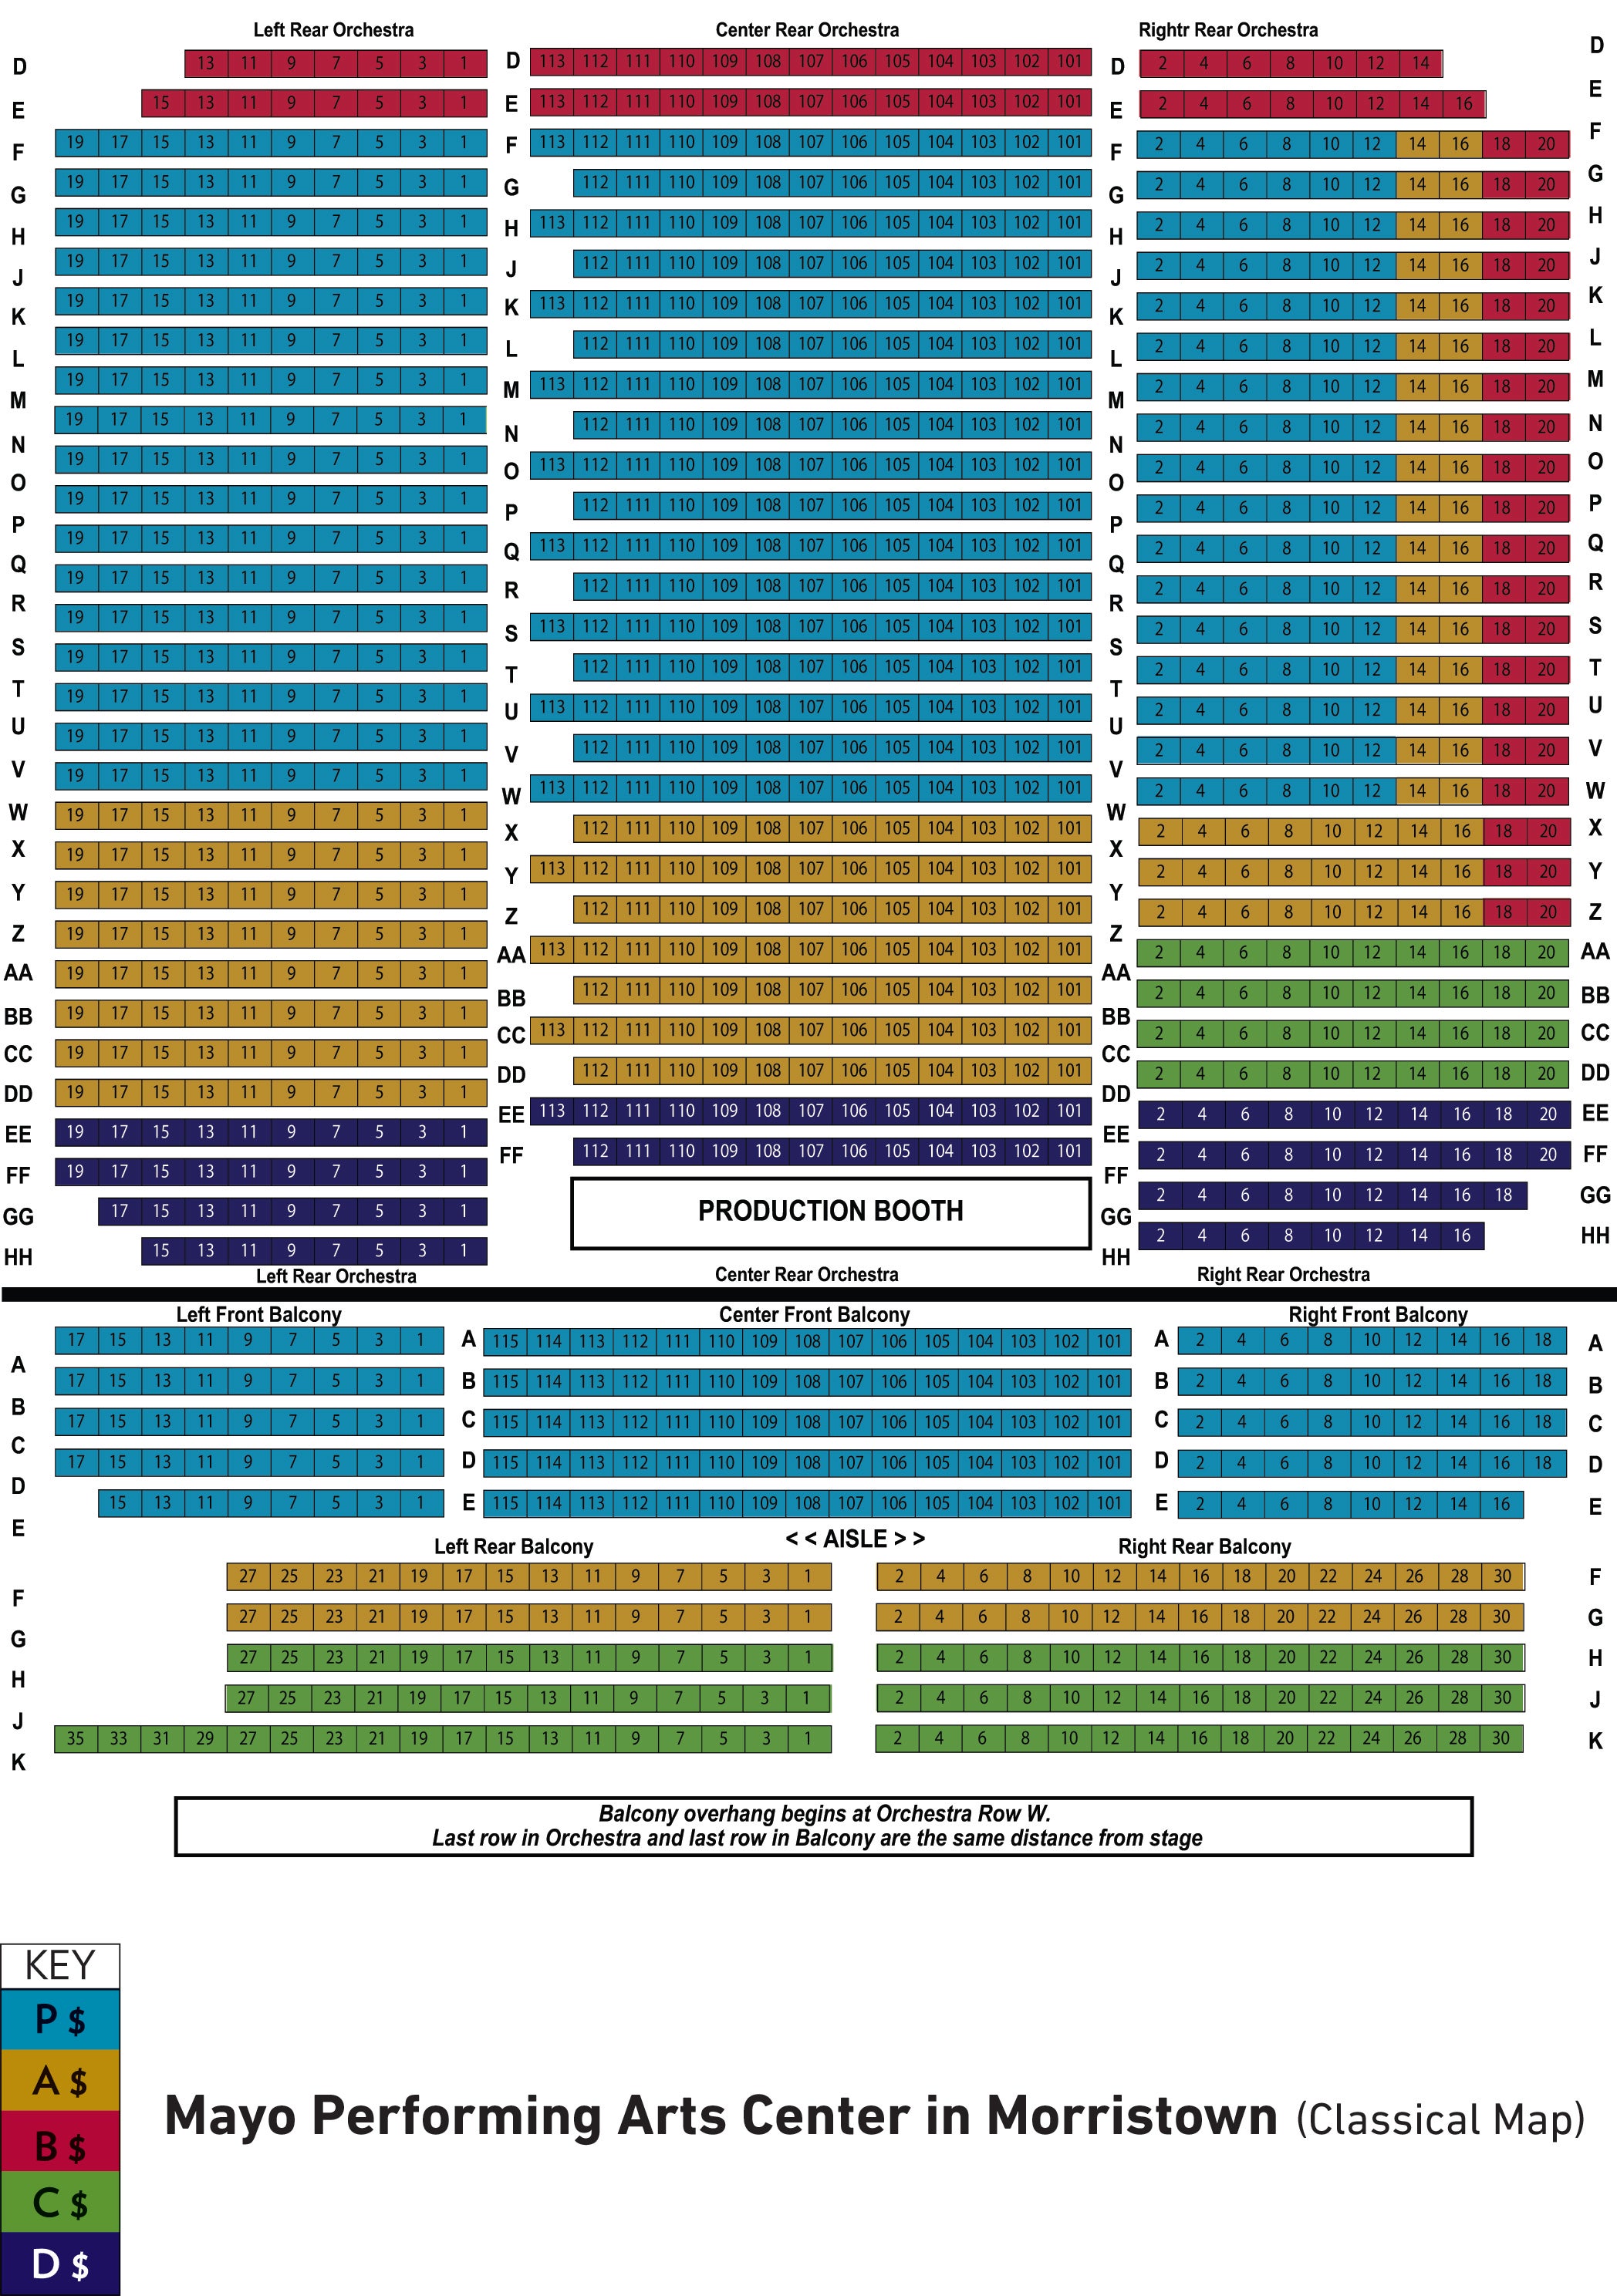 Mpac Seating Chart Morristown Nj